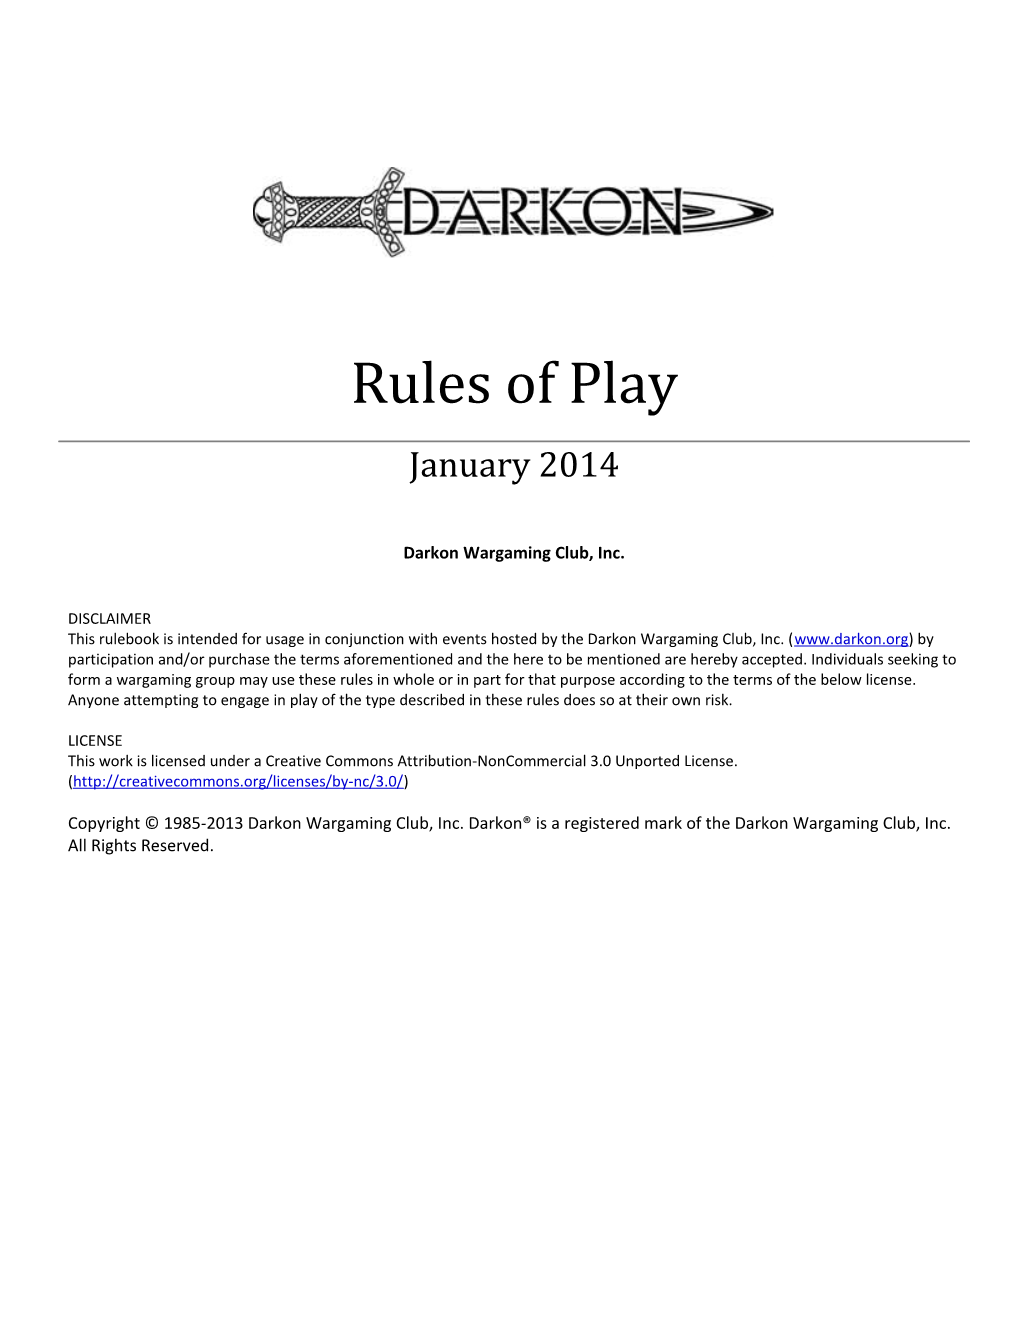 Darkon Rules of Play